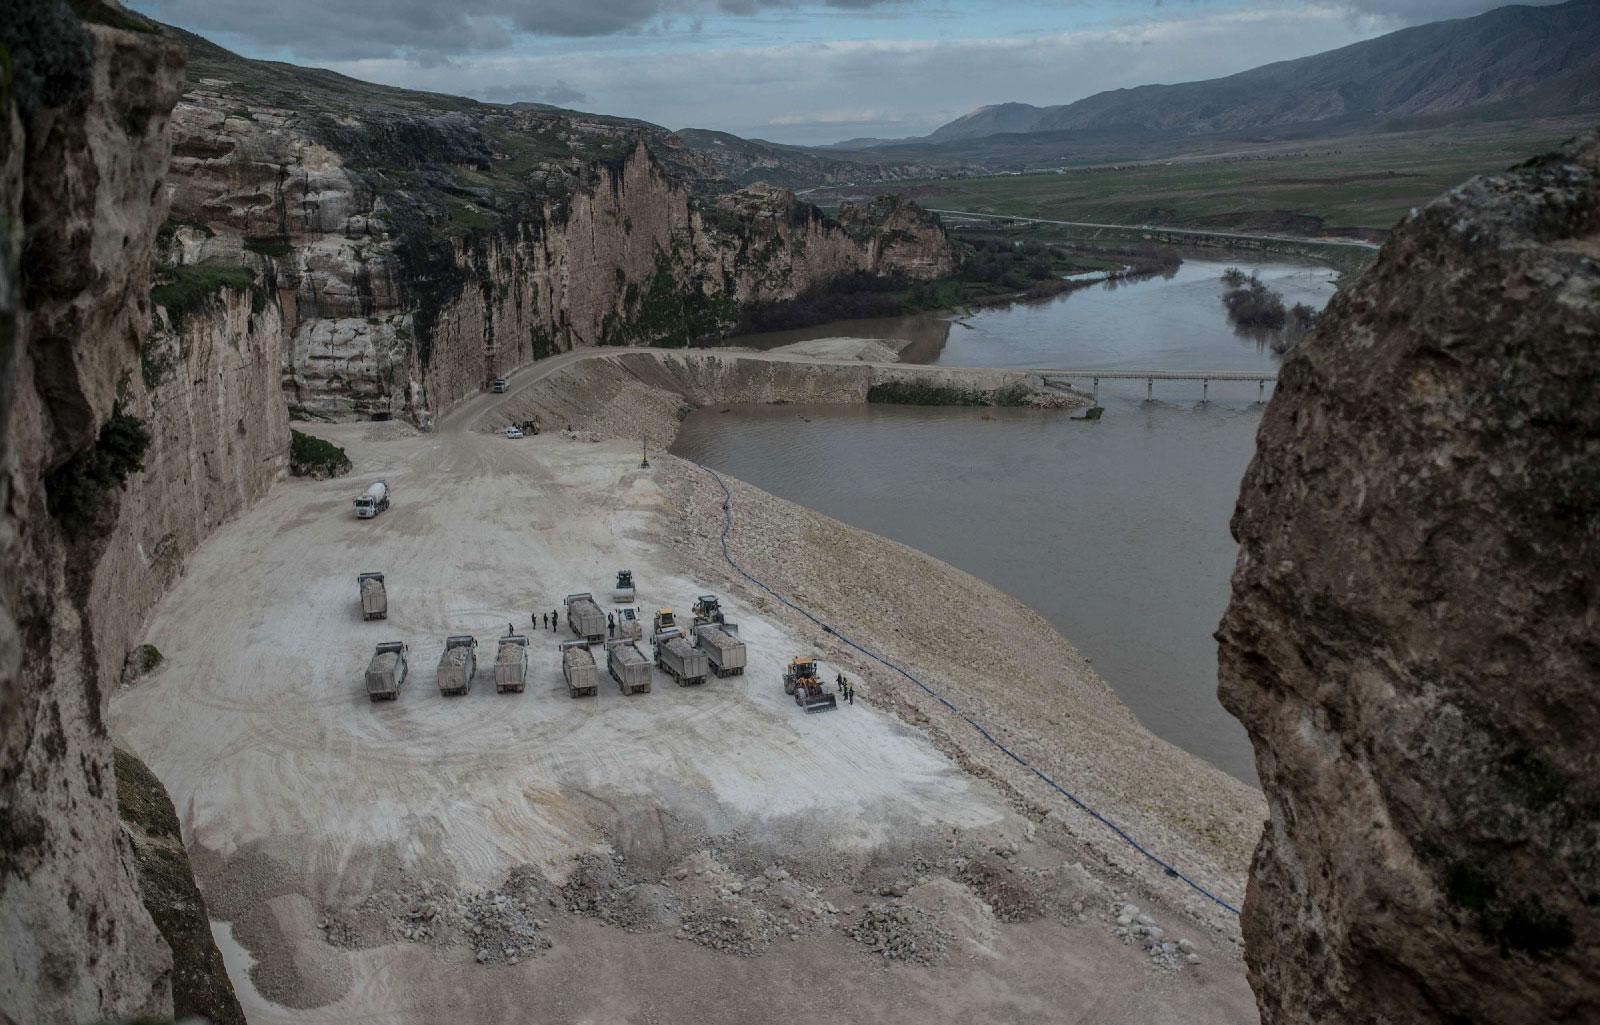 Trucks are seen on the banks of the Tigris river near Hasankeyf, in Turkey's Kurdish-majority southeast, on December 13, 2018, during the construction of the Ilisu dam.